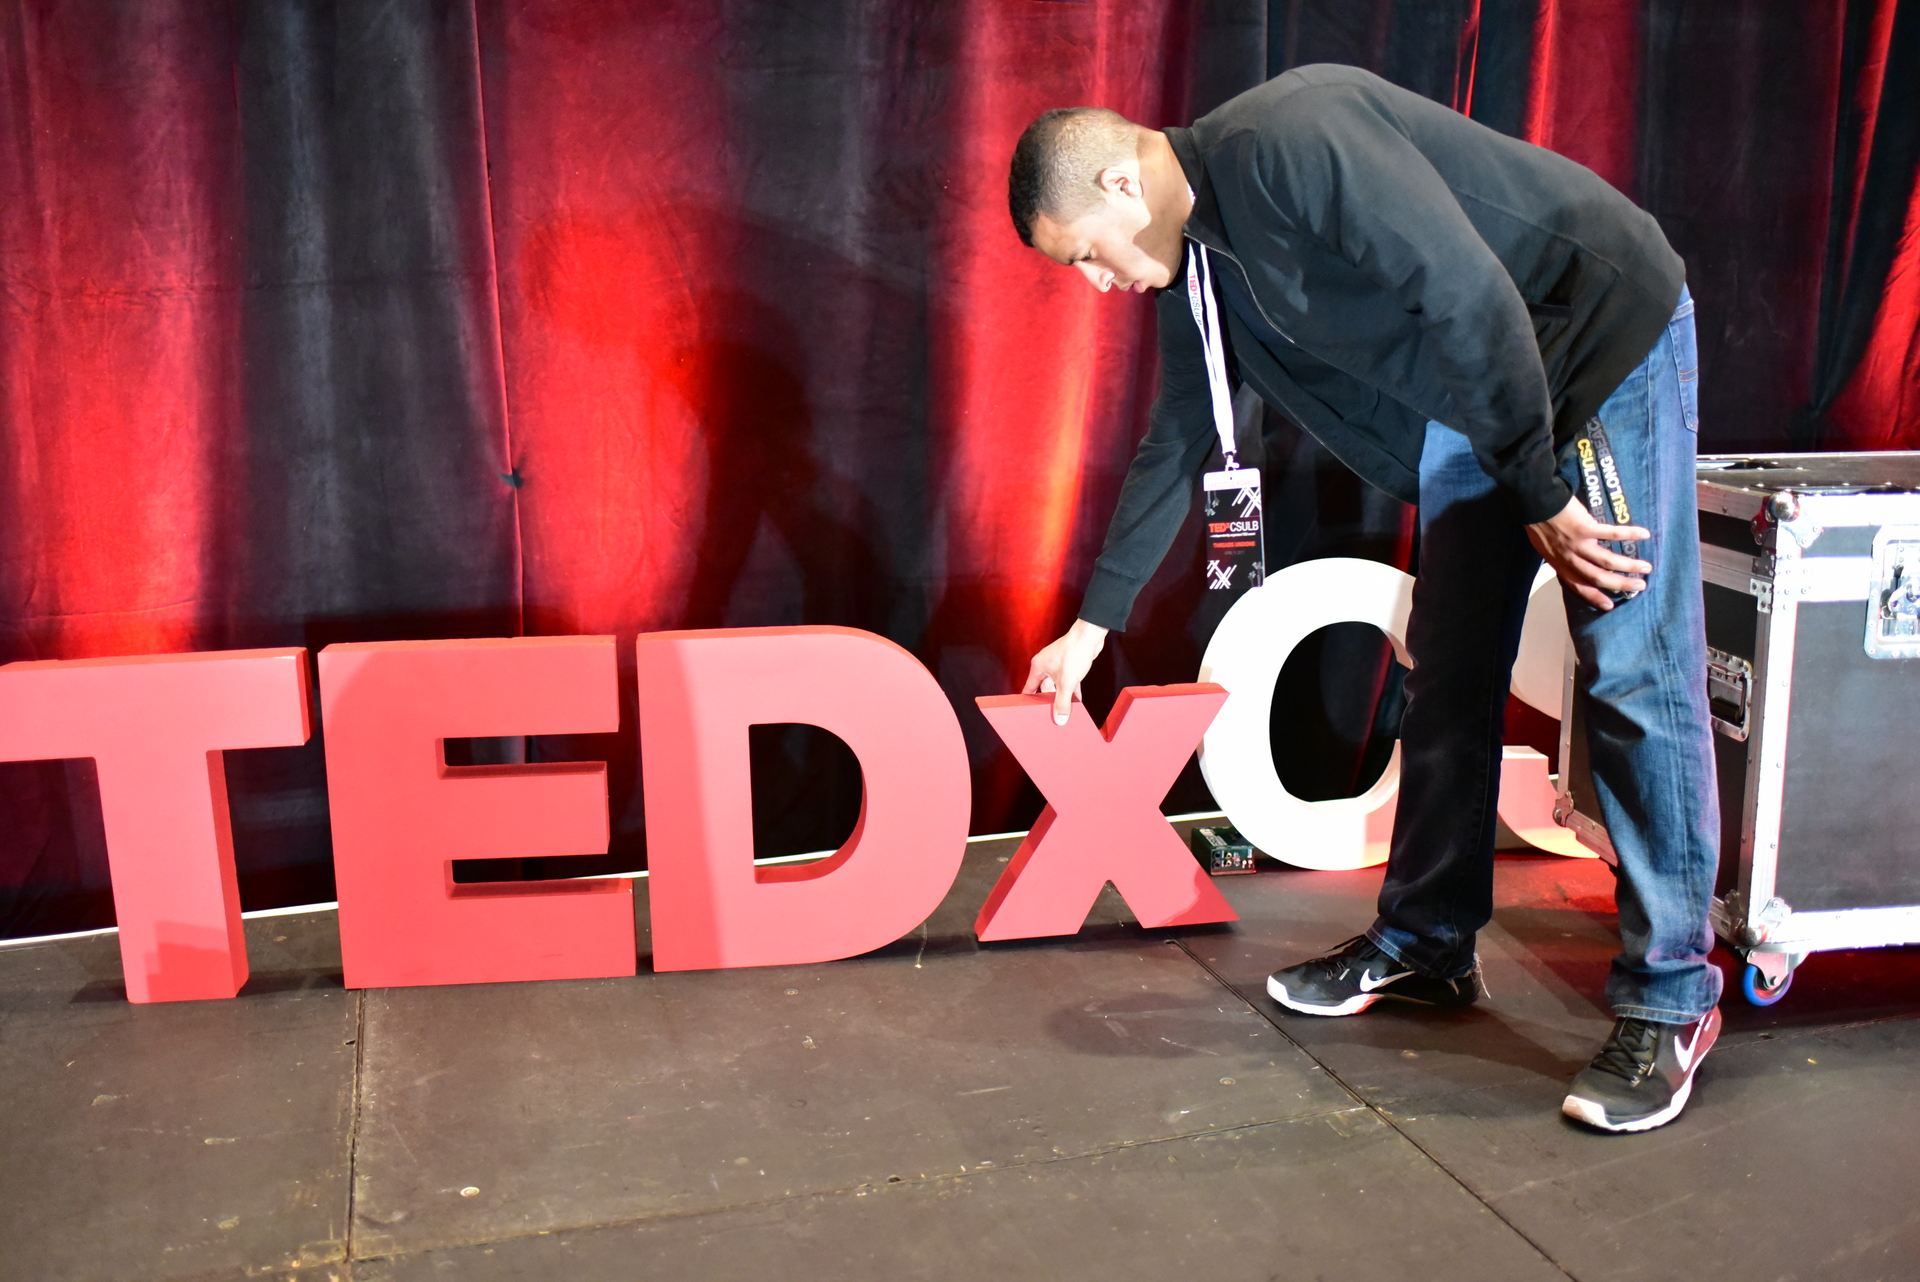 TEDxCSULB marketing director Eric Crenshaw